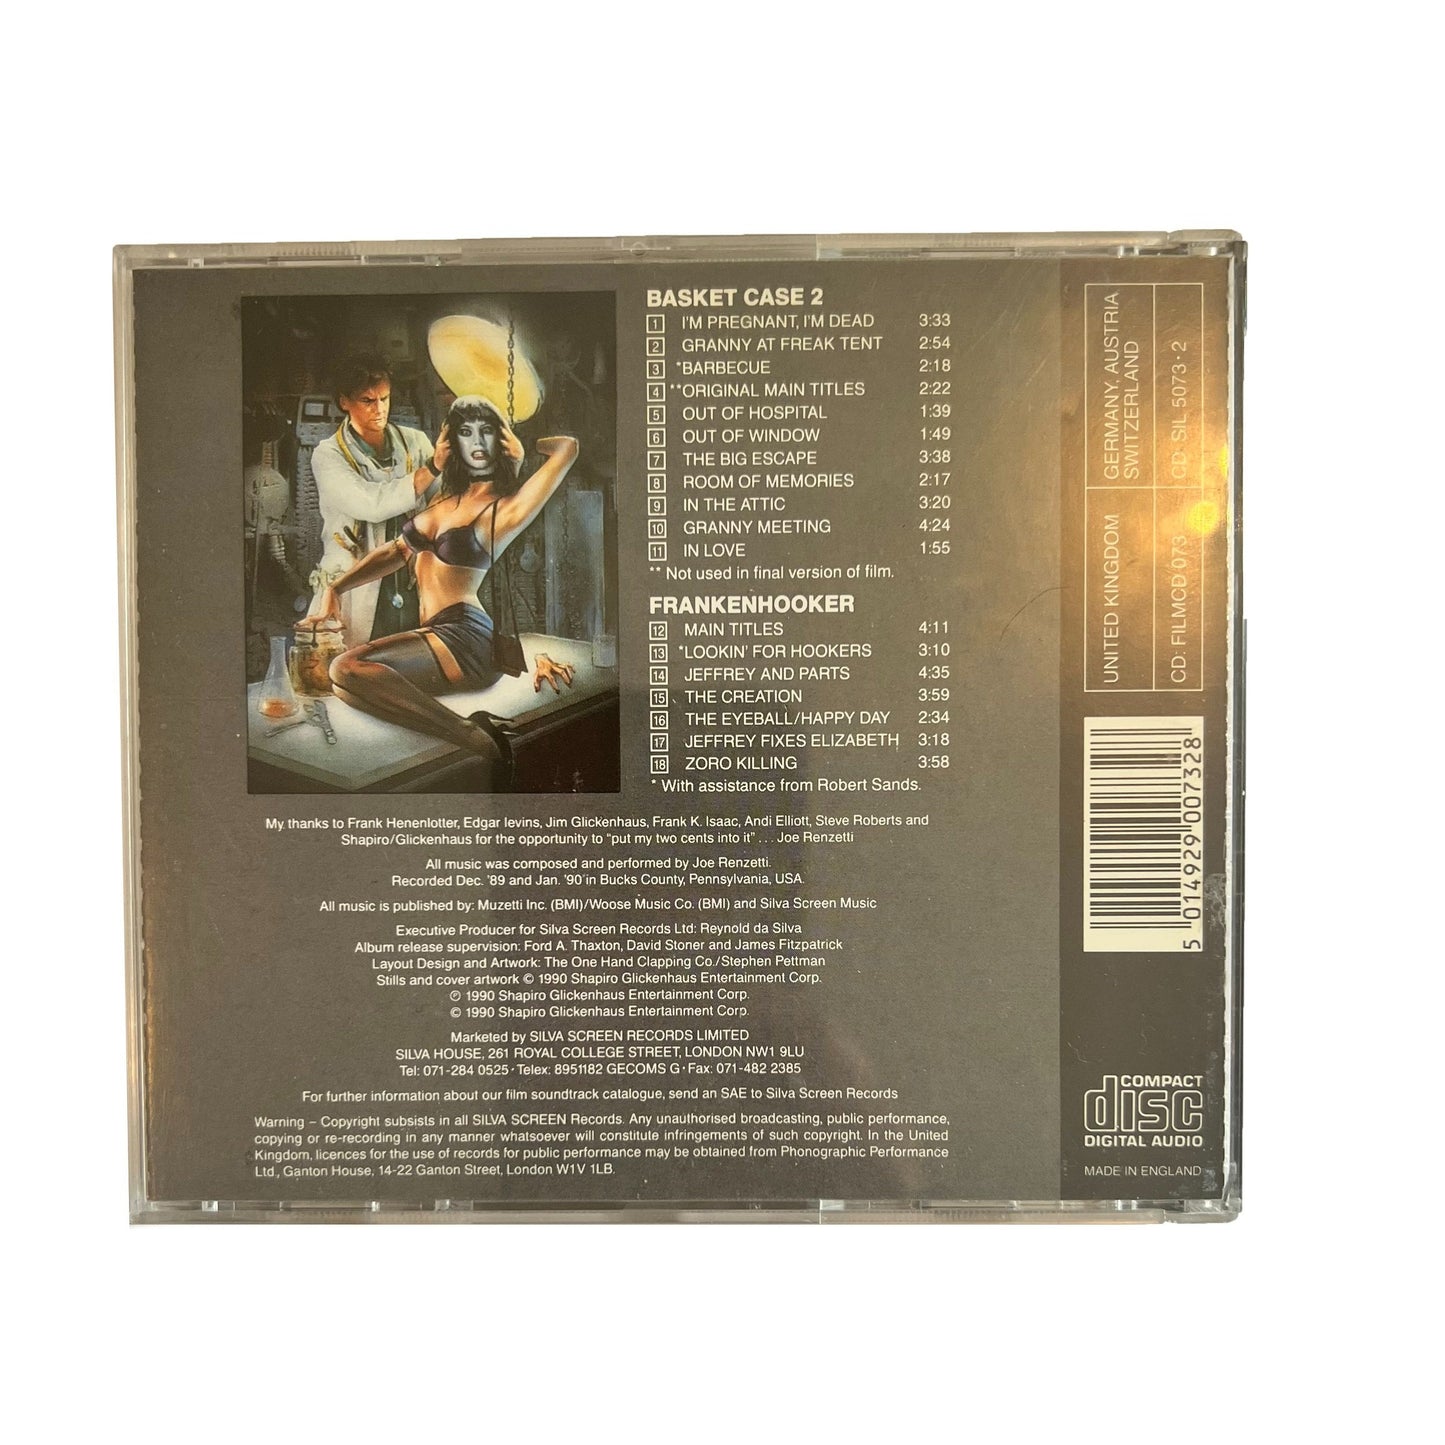 Joe Renzetti – Basket Case 2 / Frankenhooker (Original Soundtracks) CD